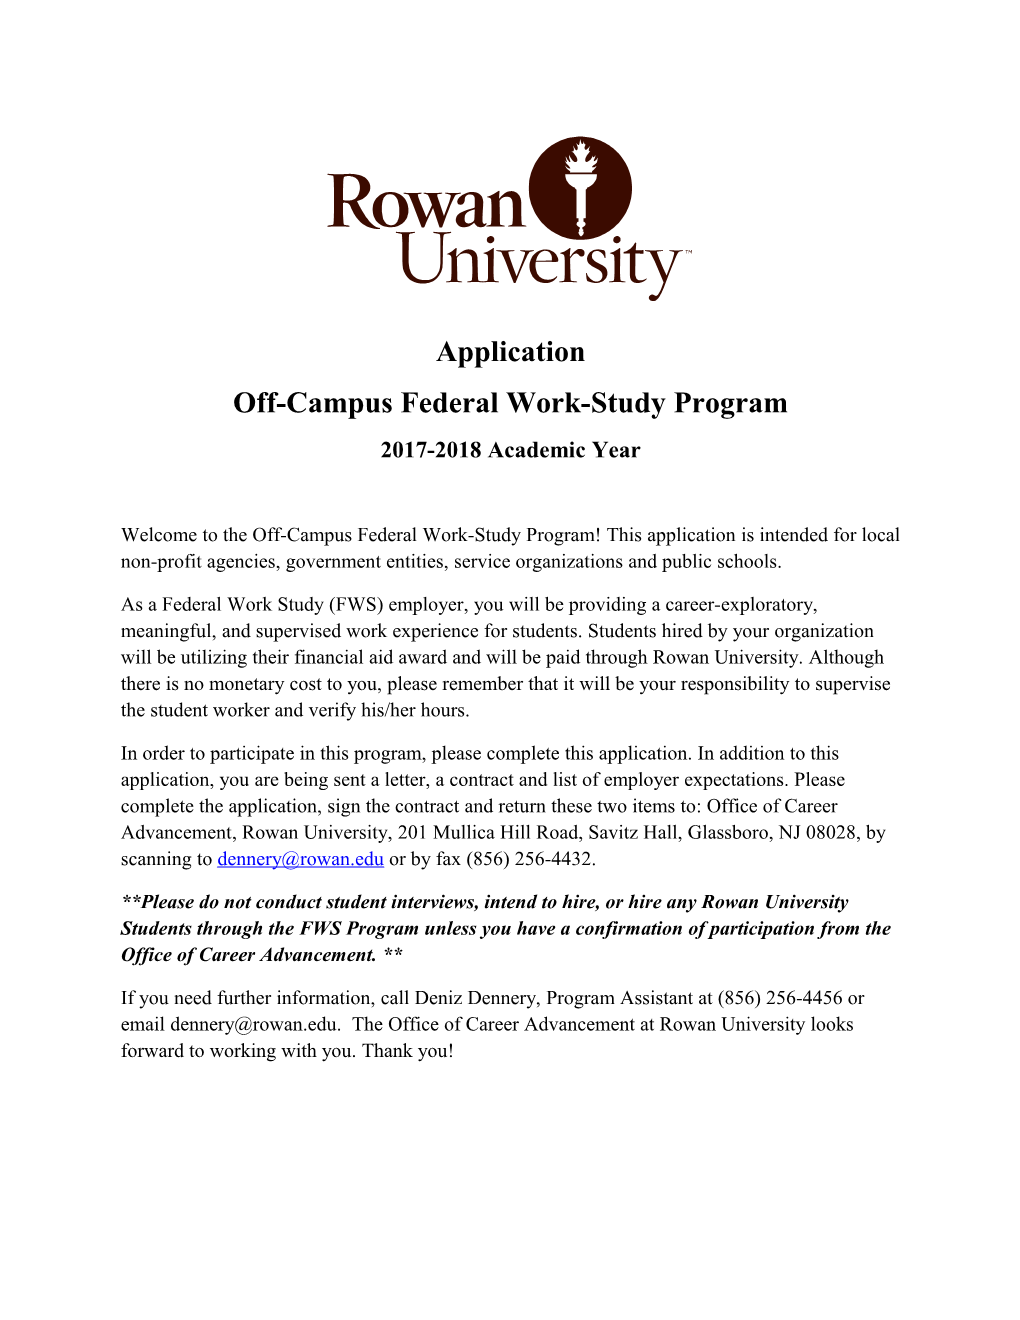 Off-Campus Federal Work-Study Program